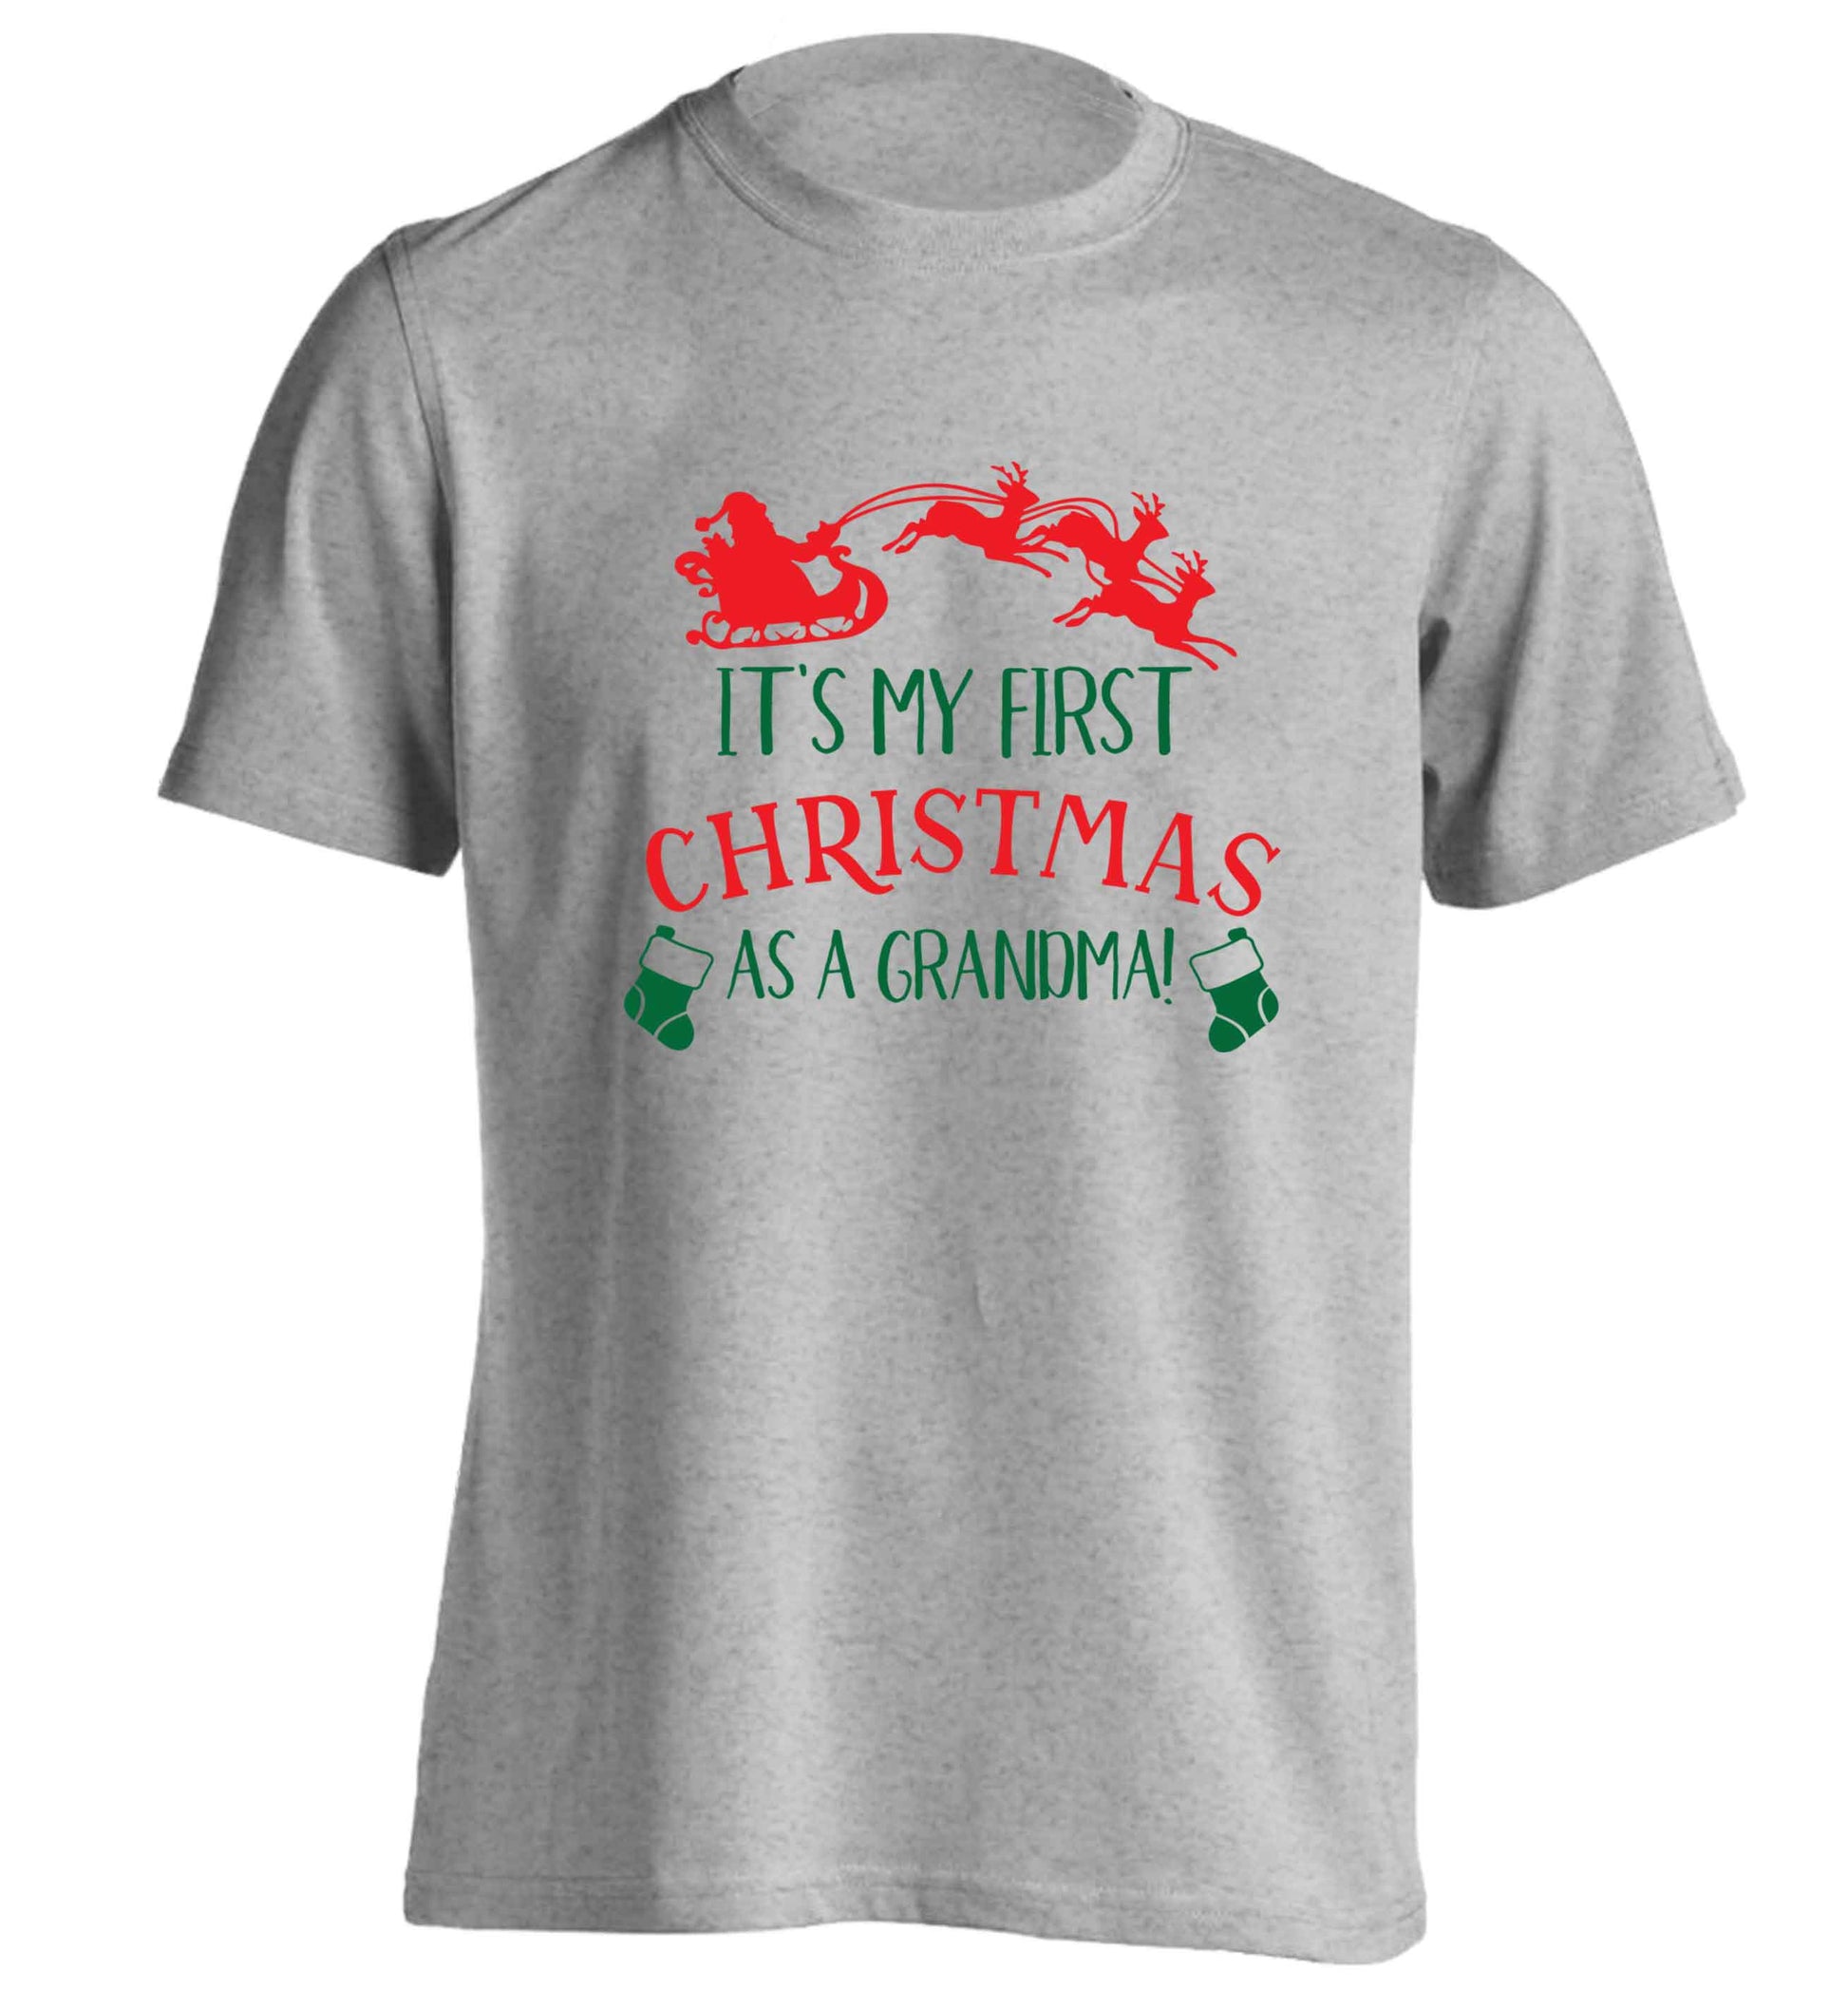 It's my first Christmas as a grandma! adults unisex grey Tshirt 2XL